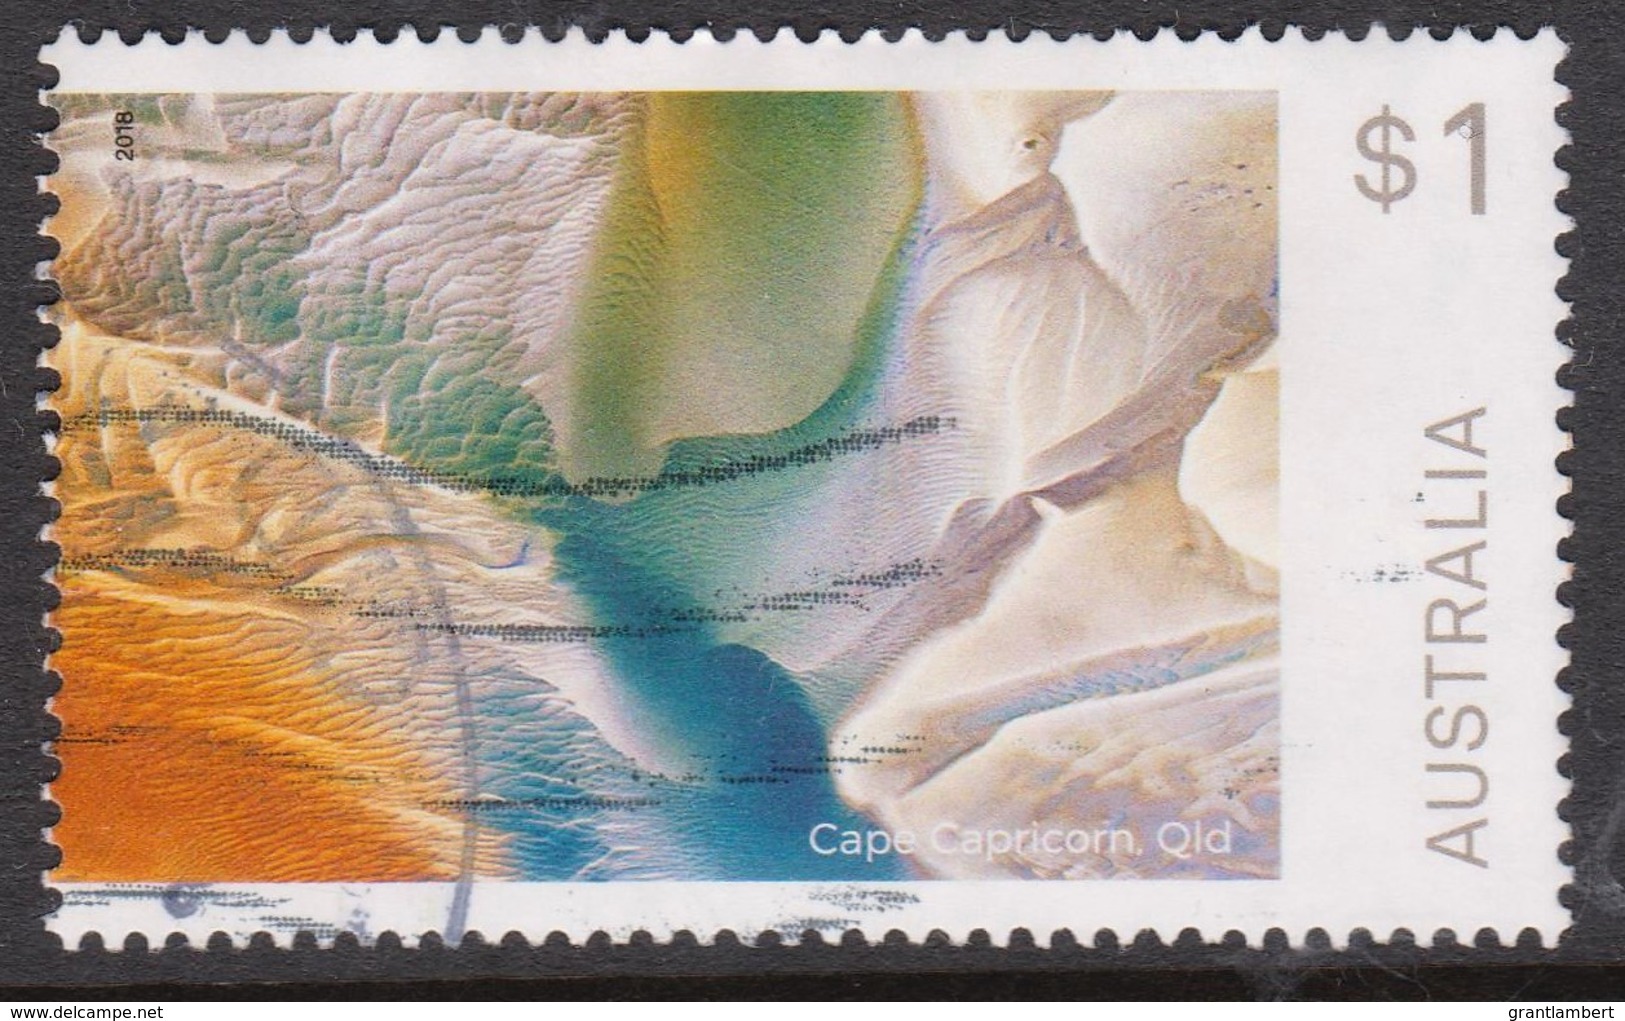 Australia 2018 Art In Nature $1 Cape Capricorn Used - Used Stamps